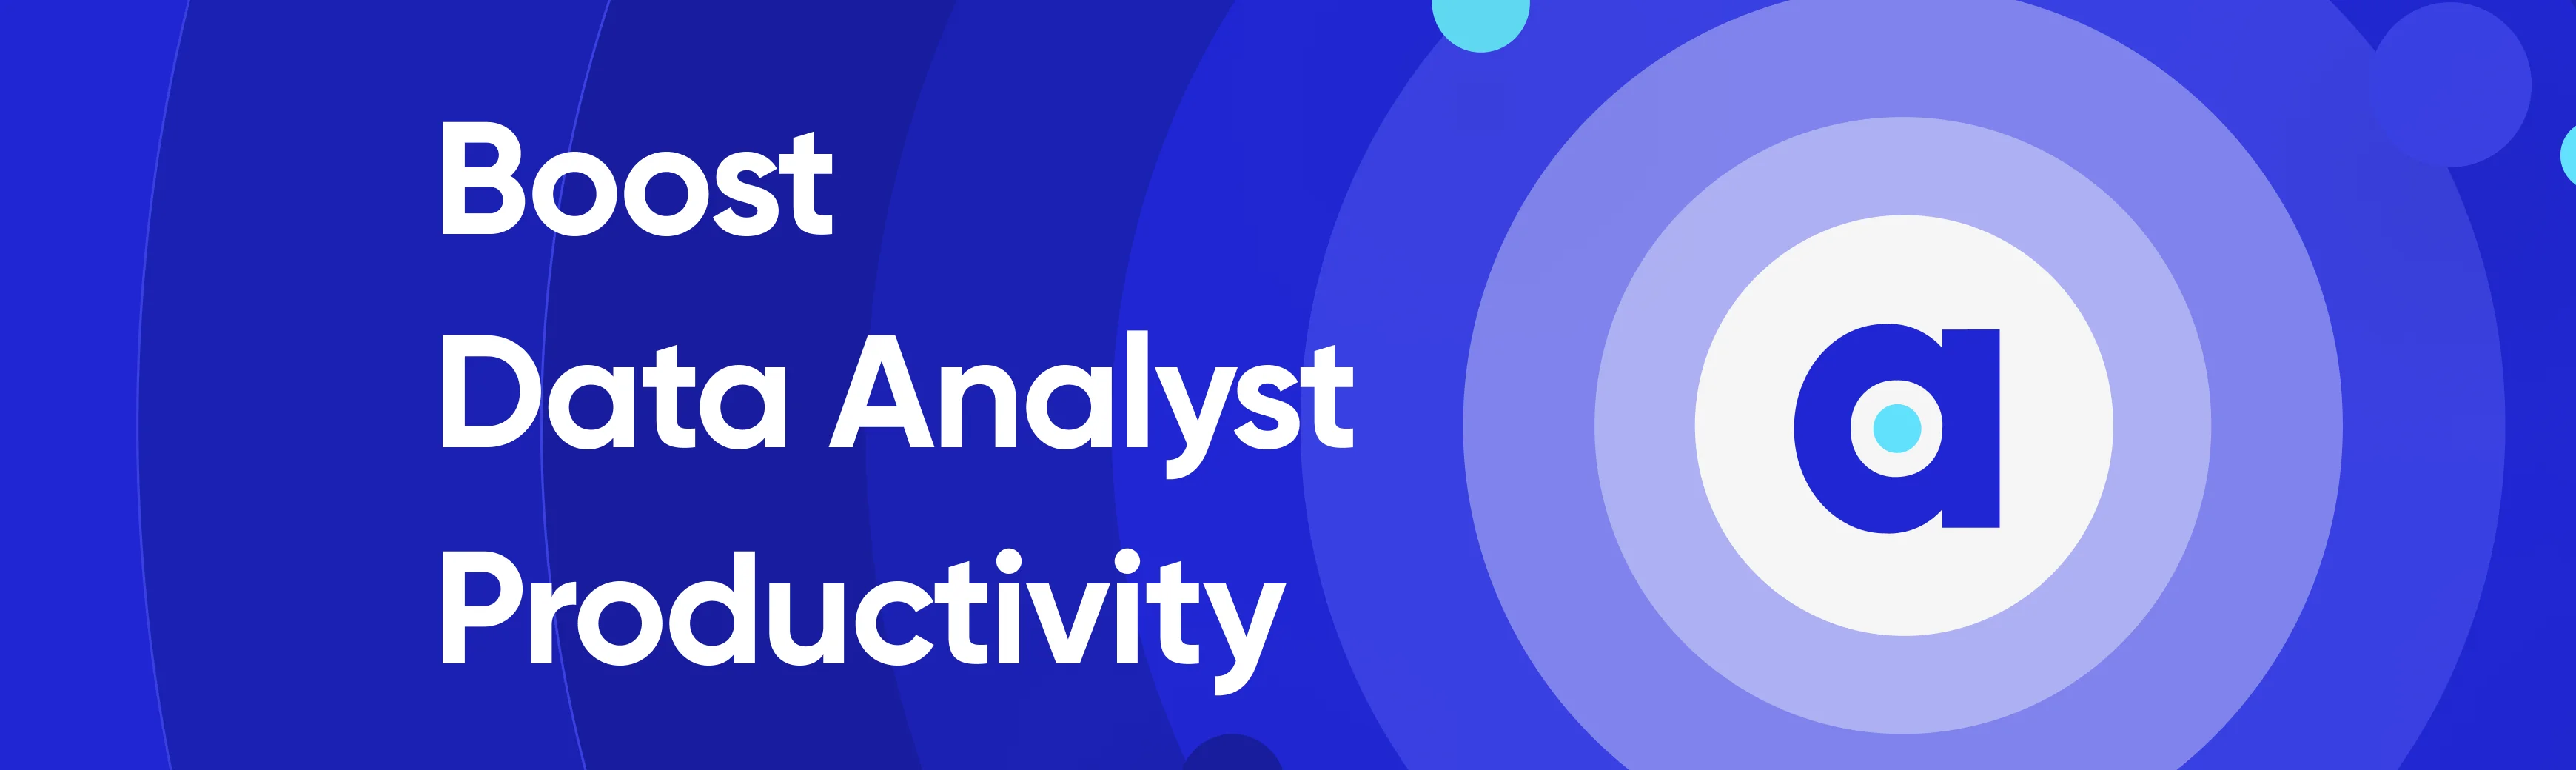 Data analyst productivity